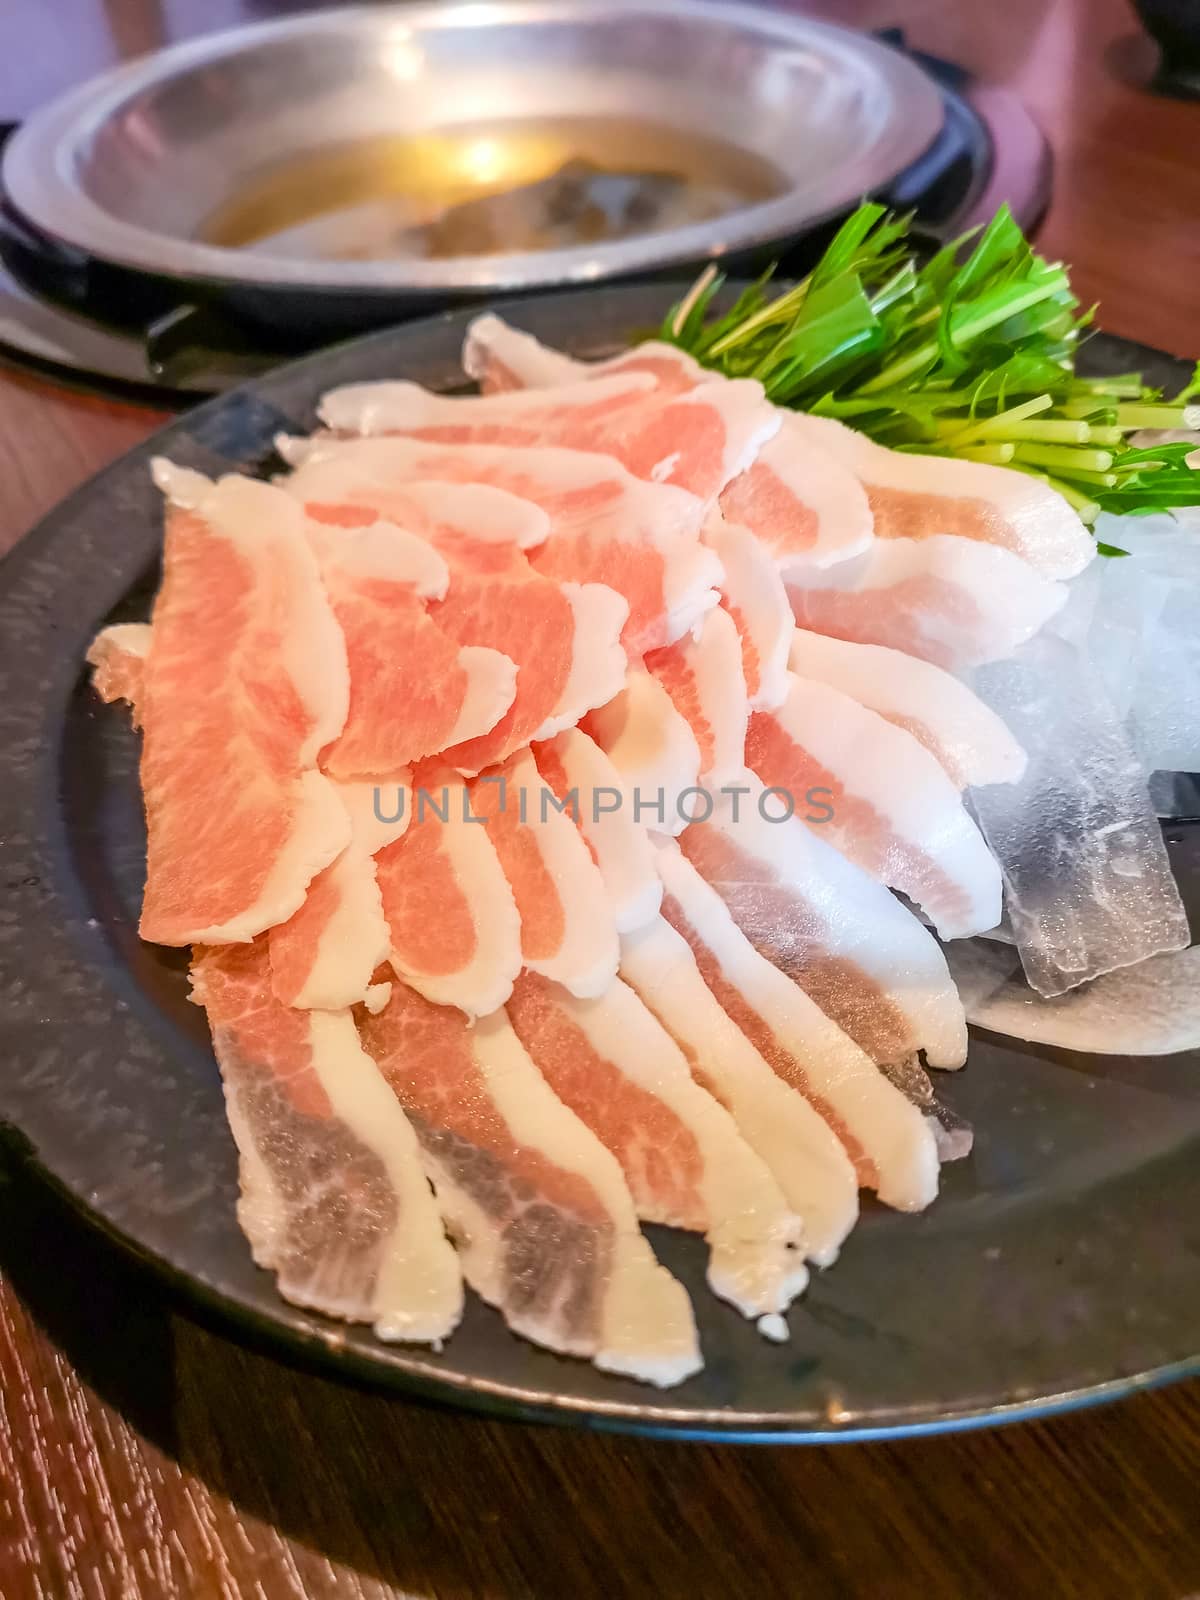 Okinawa style local pork shabu in Naha, Japan